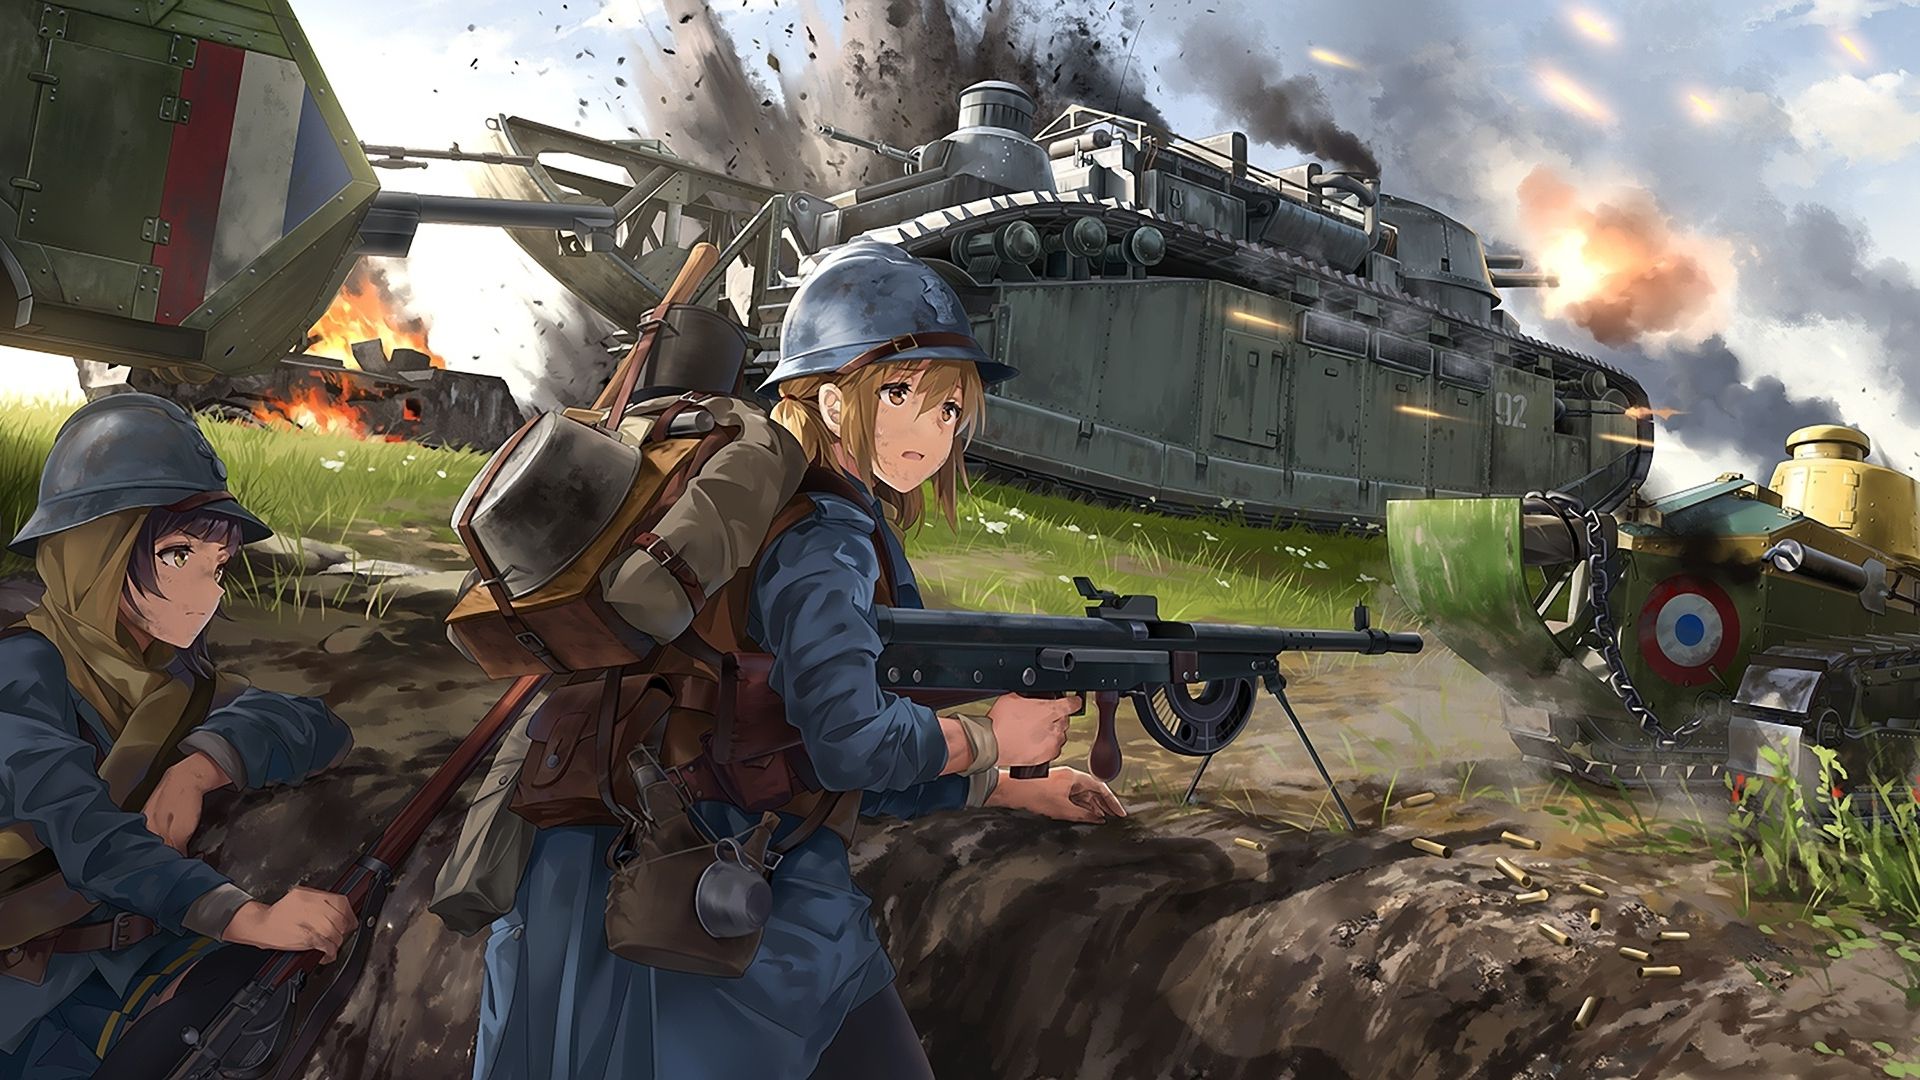 Download 1920x1080 wallpaper cute soldiers, anime girls, artwork